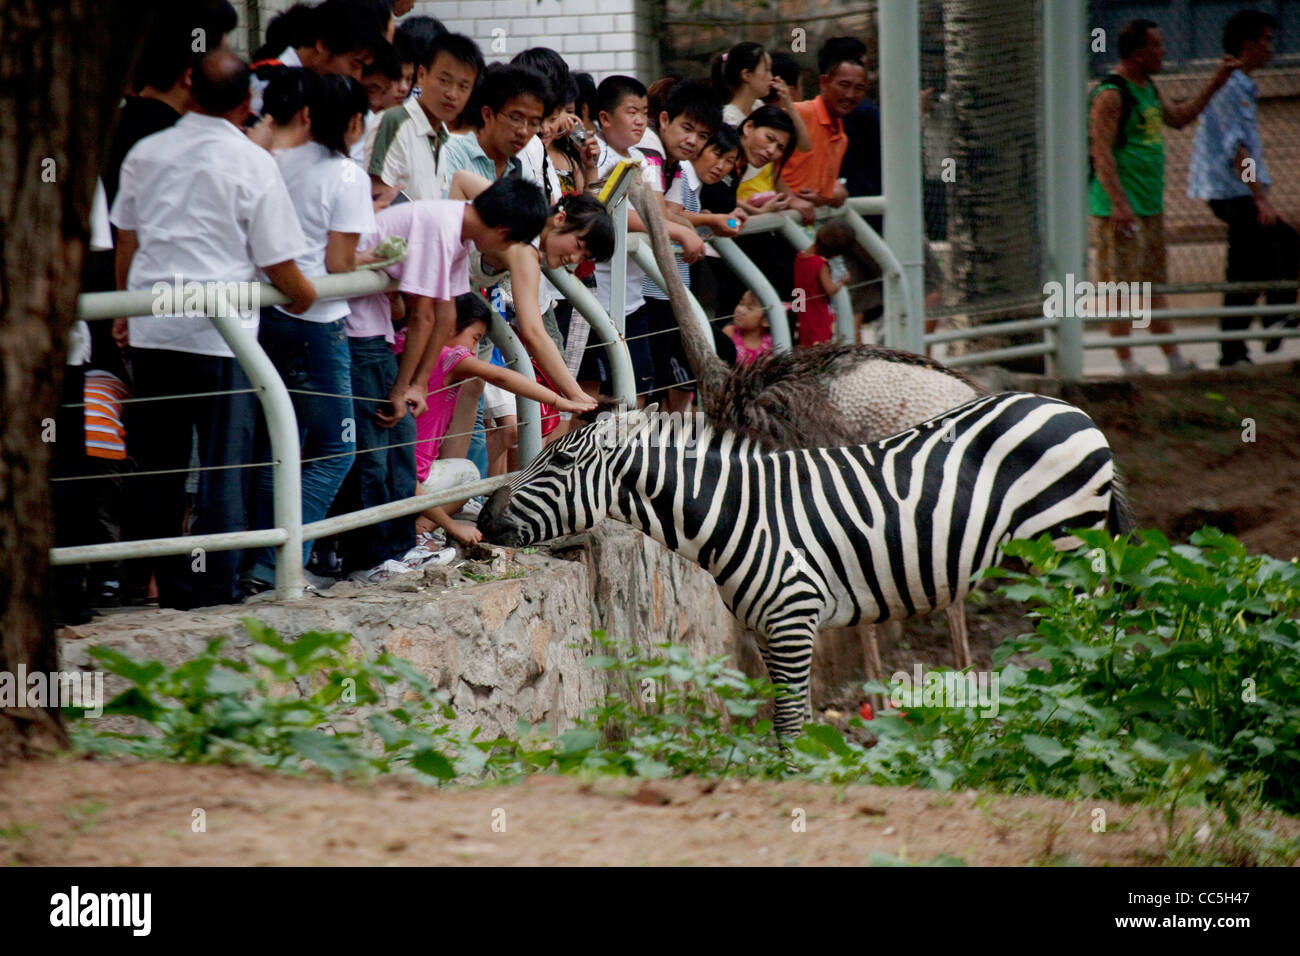 People looking at zebra, Beijing Zoo, China Stock Photo